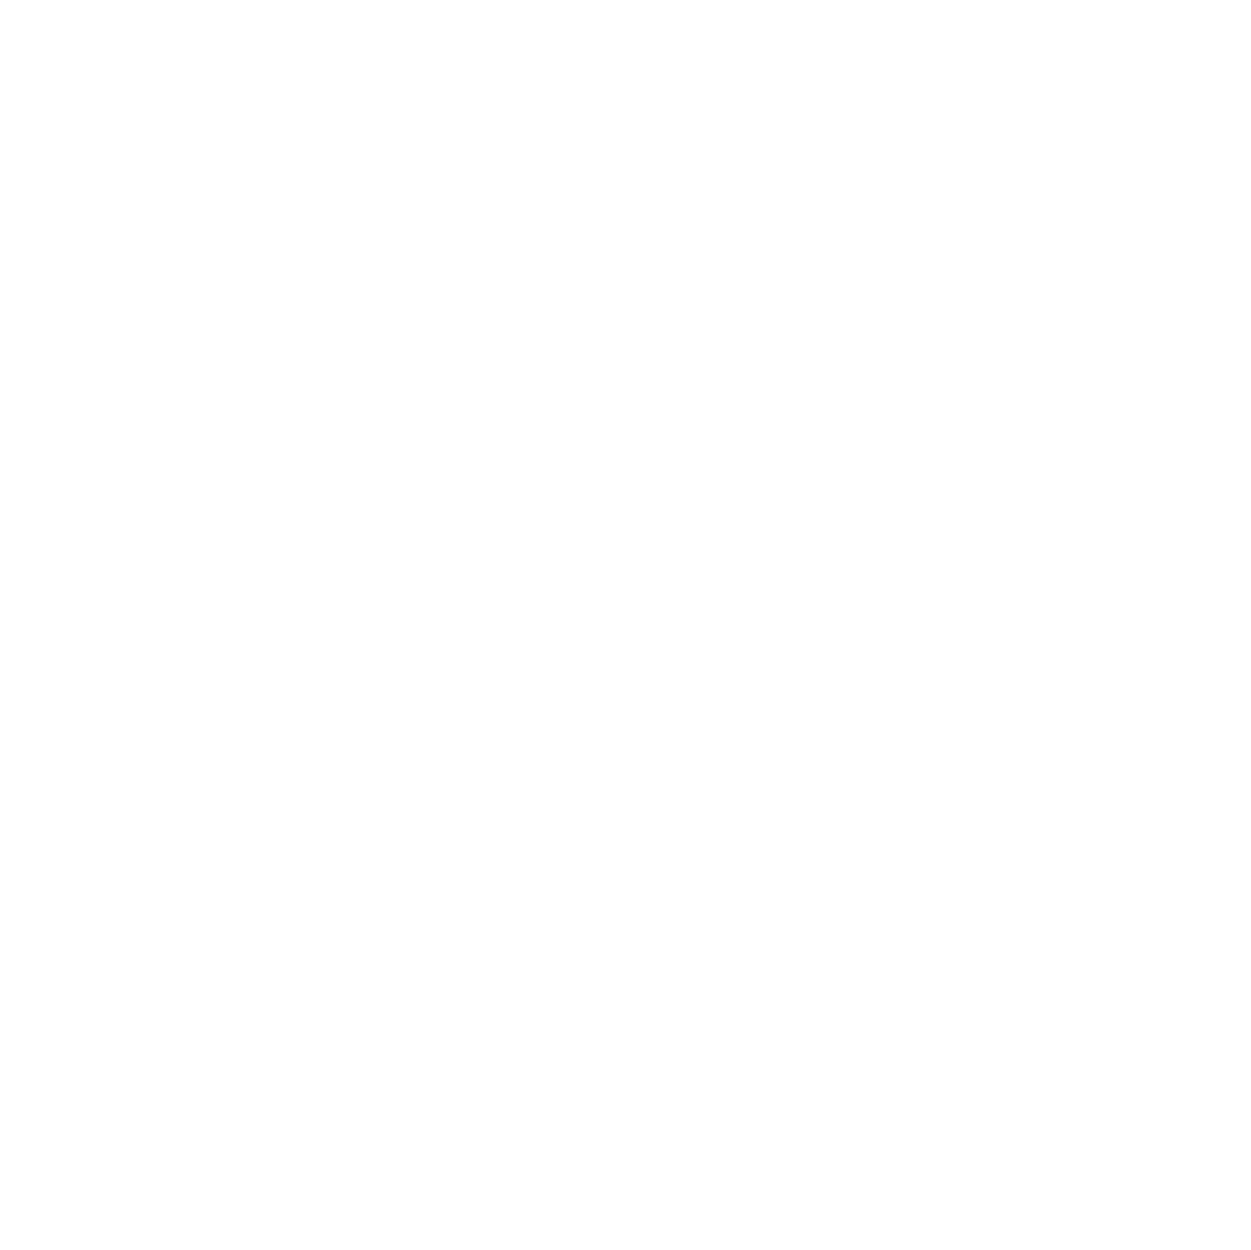 united-states-map-icon